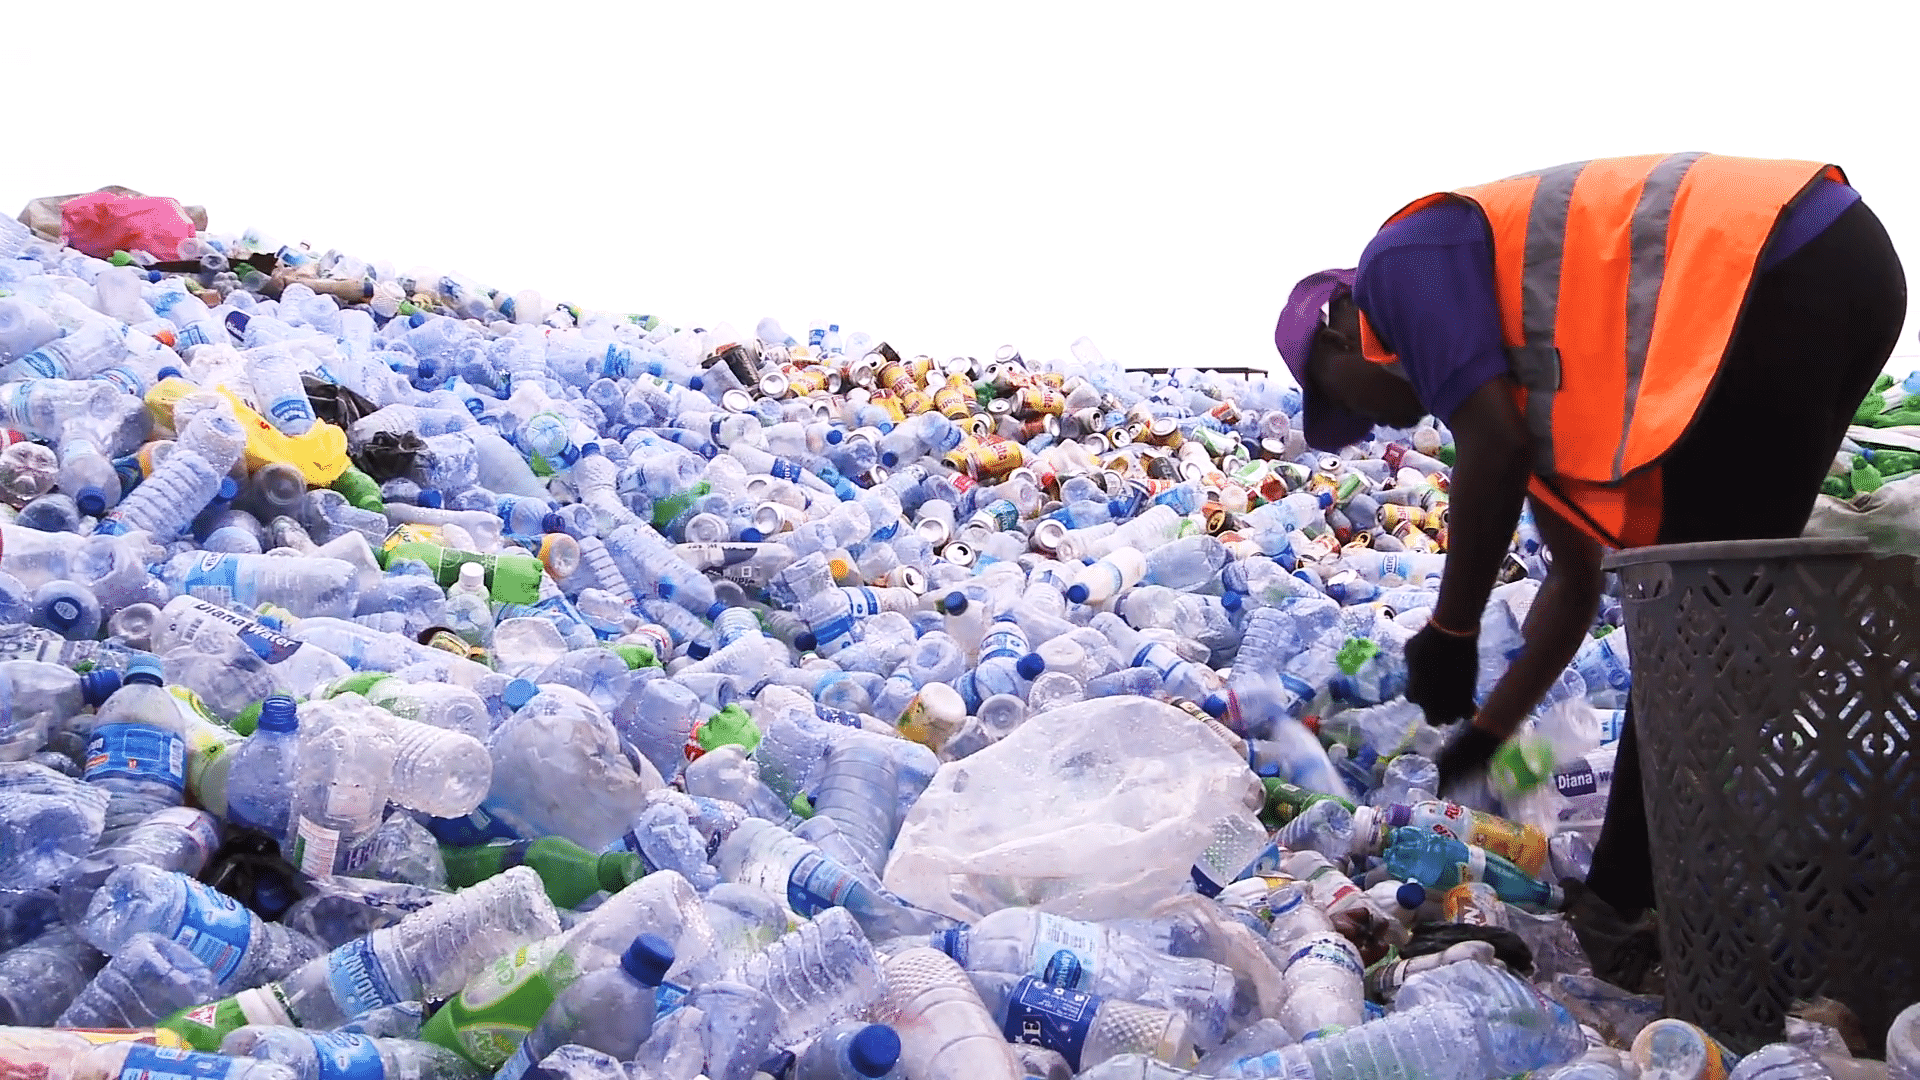 recycling in africa employee sorts empty bottles and containers at recycling center 1080p hd lagos nigeria circa may 2014 4kqbg8 a F0000 ثورةٌ قادمةٌ في عالم إعادة تدوير النفايات مجلة نقطة العلمية